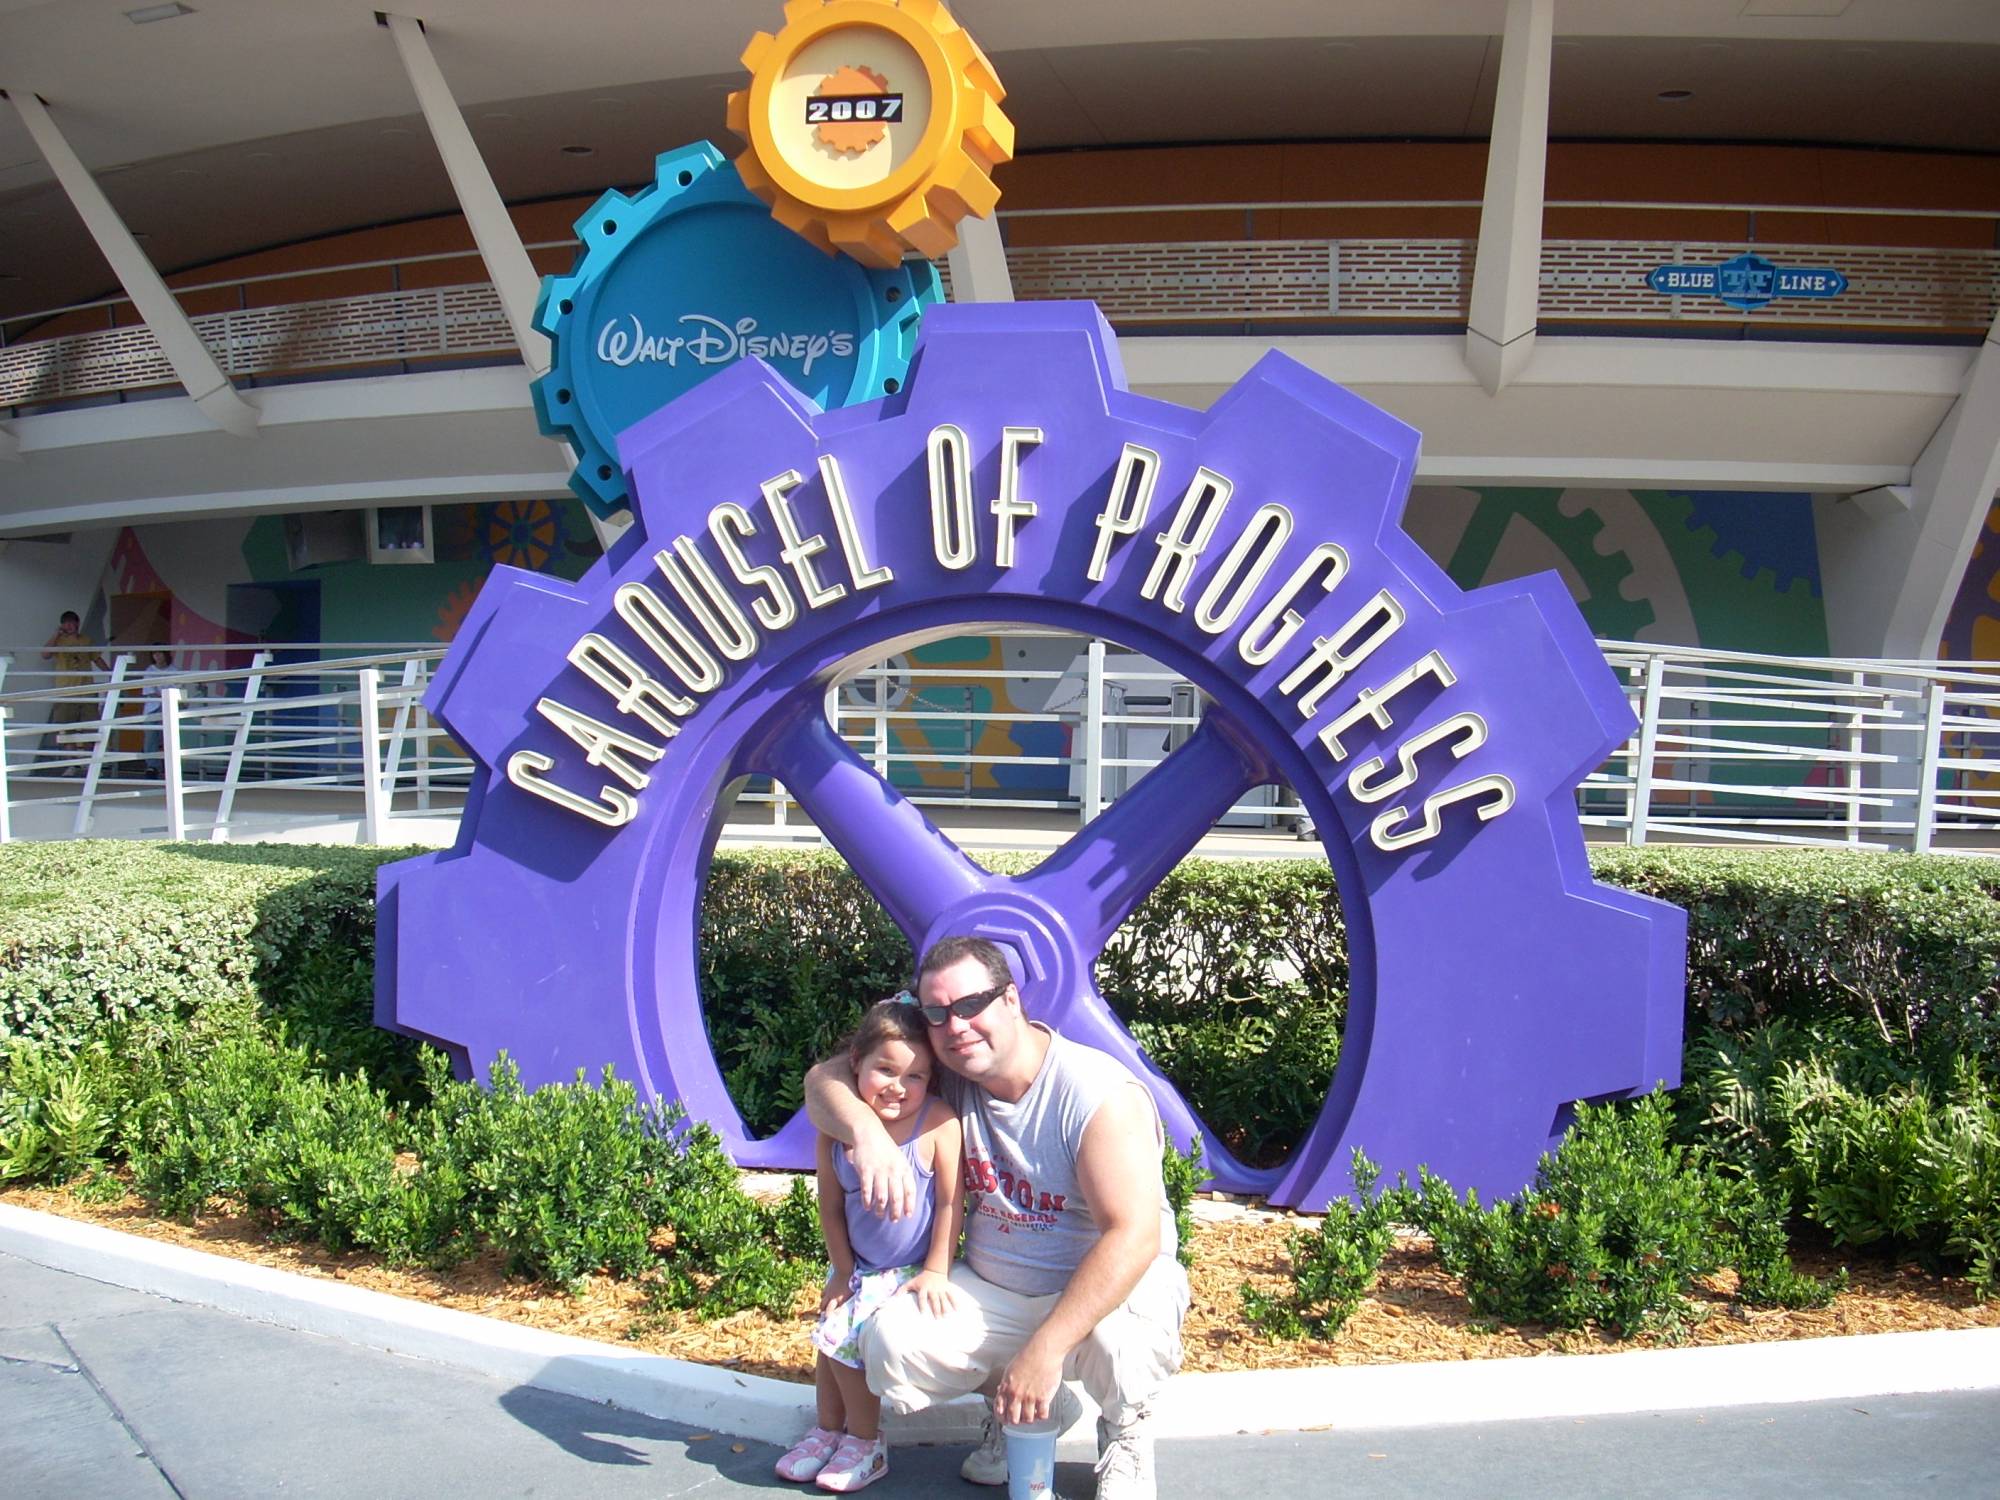 Magic Kingdom - Tomorrowland's Carousel of Progress